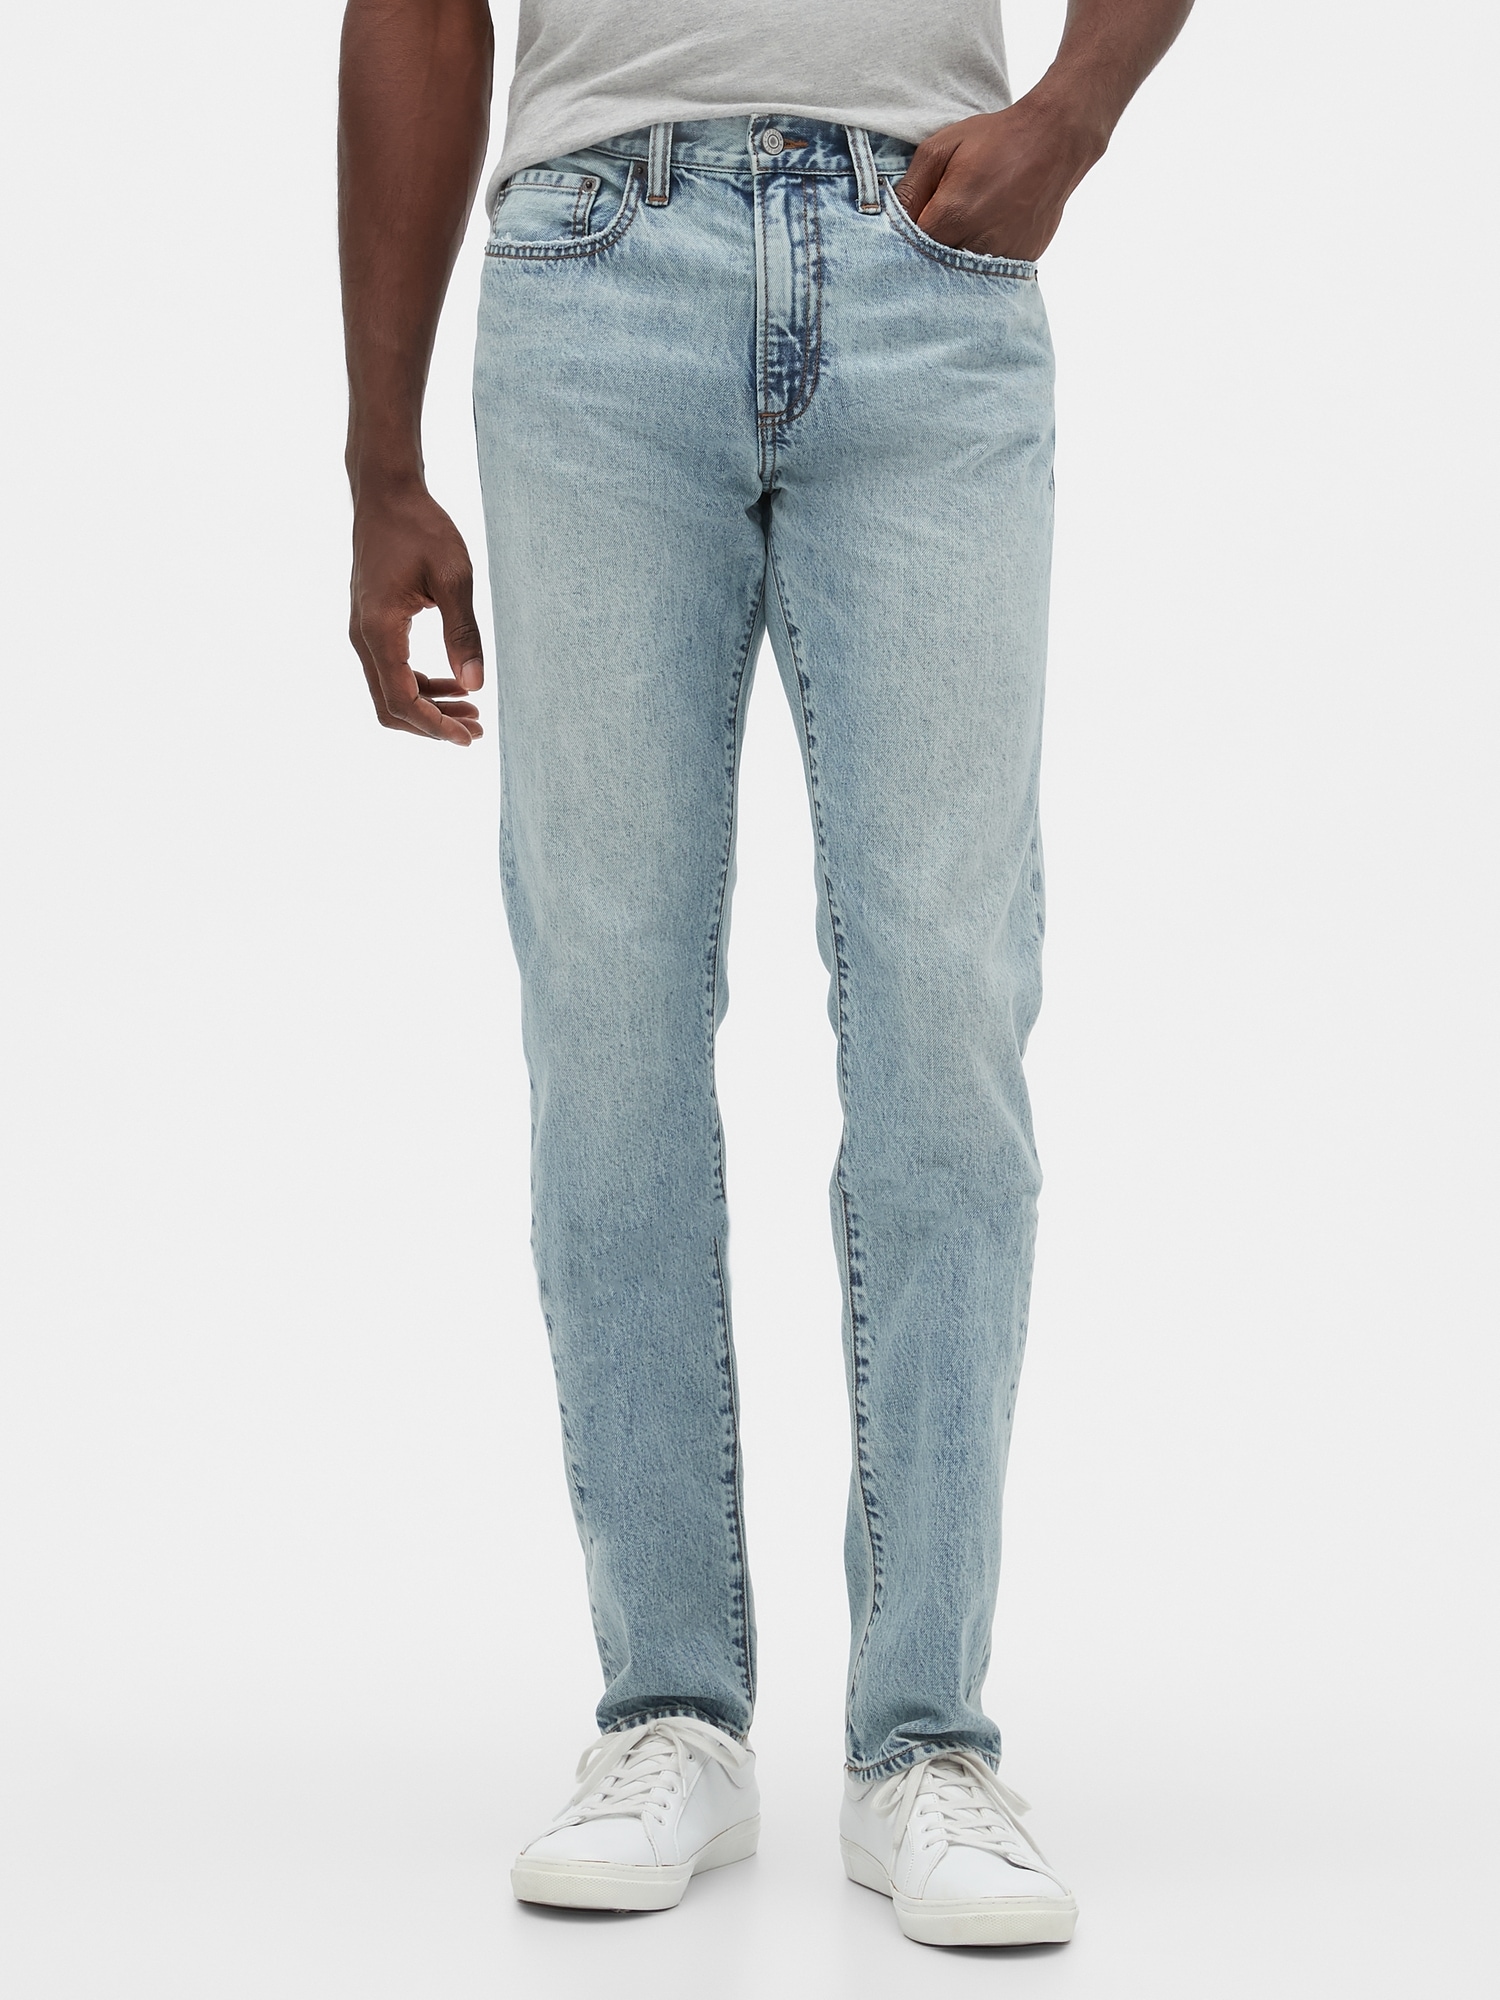 gap factory mens jeans